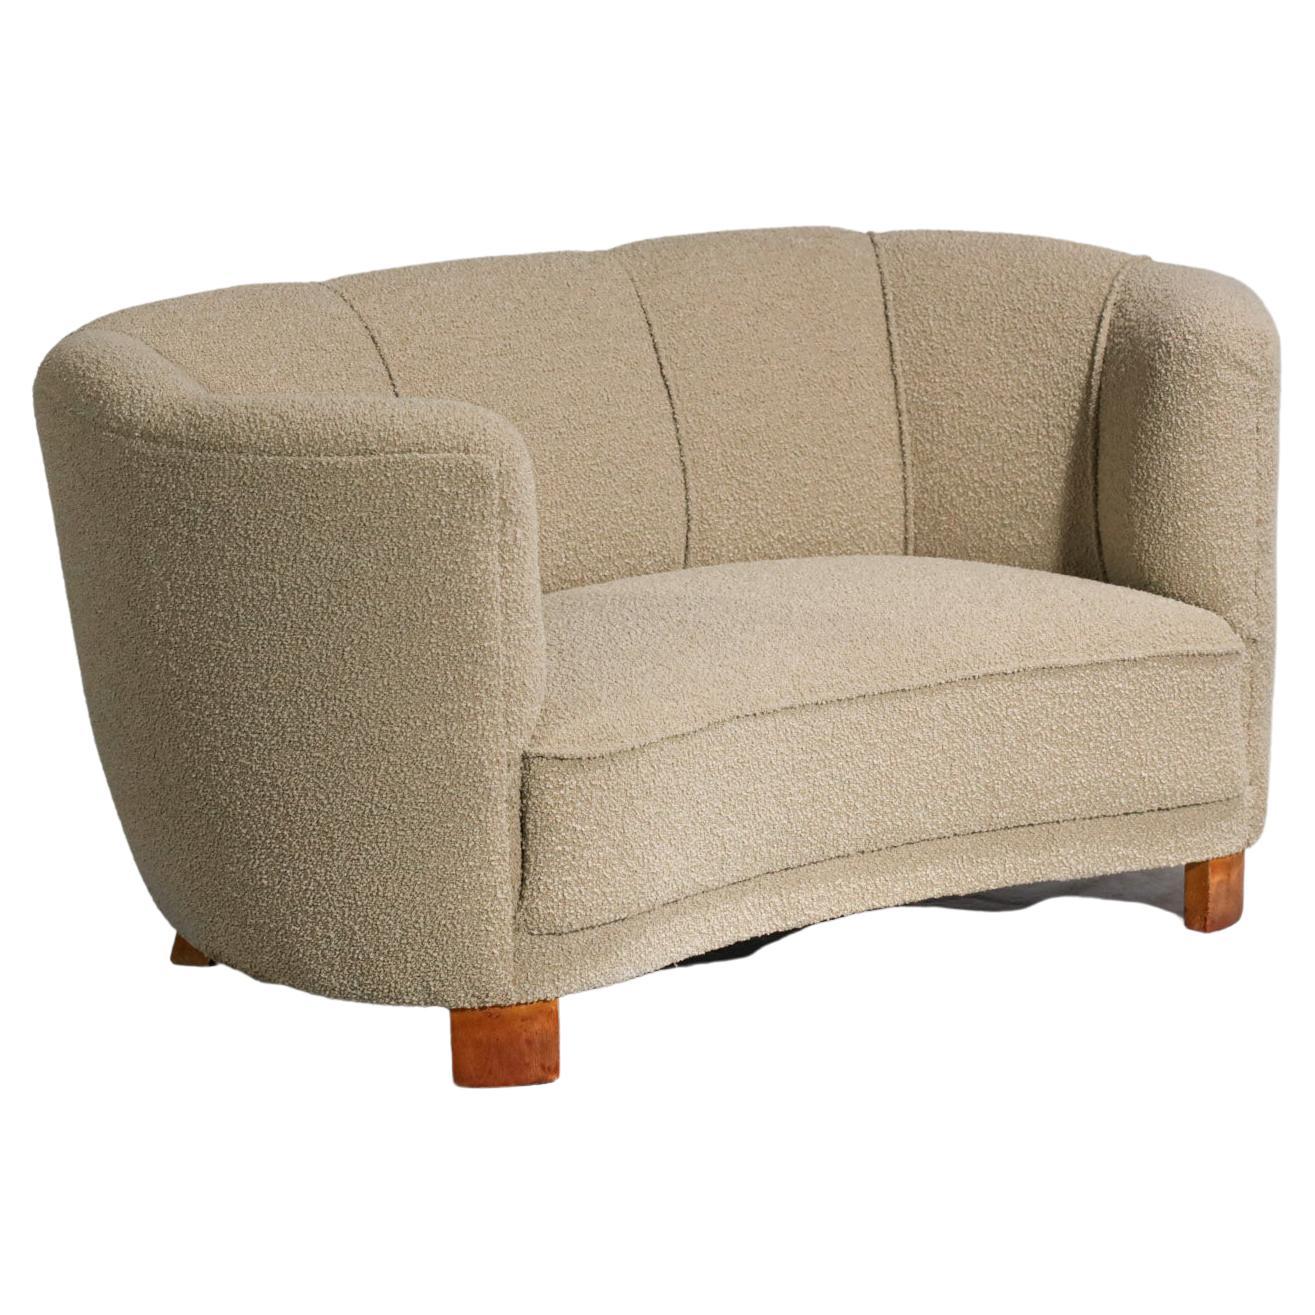 Rare Danish Sofa from the 40's Curved Beige Fabric Scandinavian Armchair